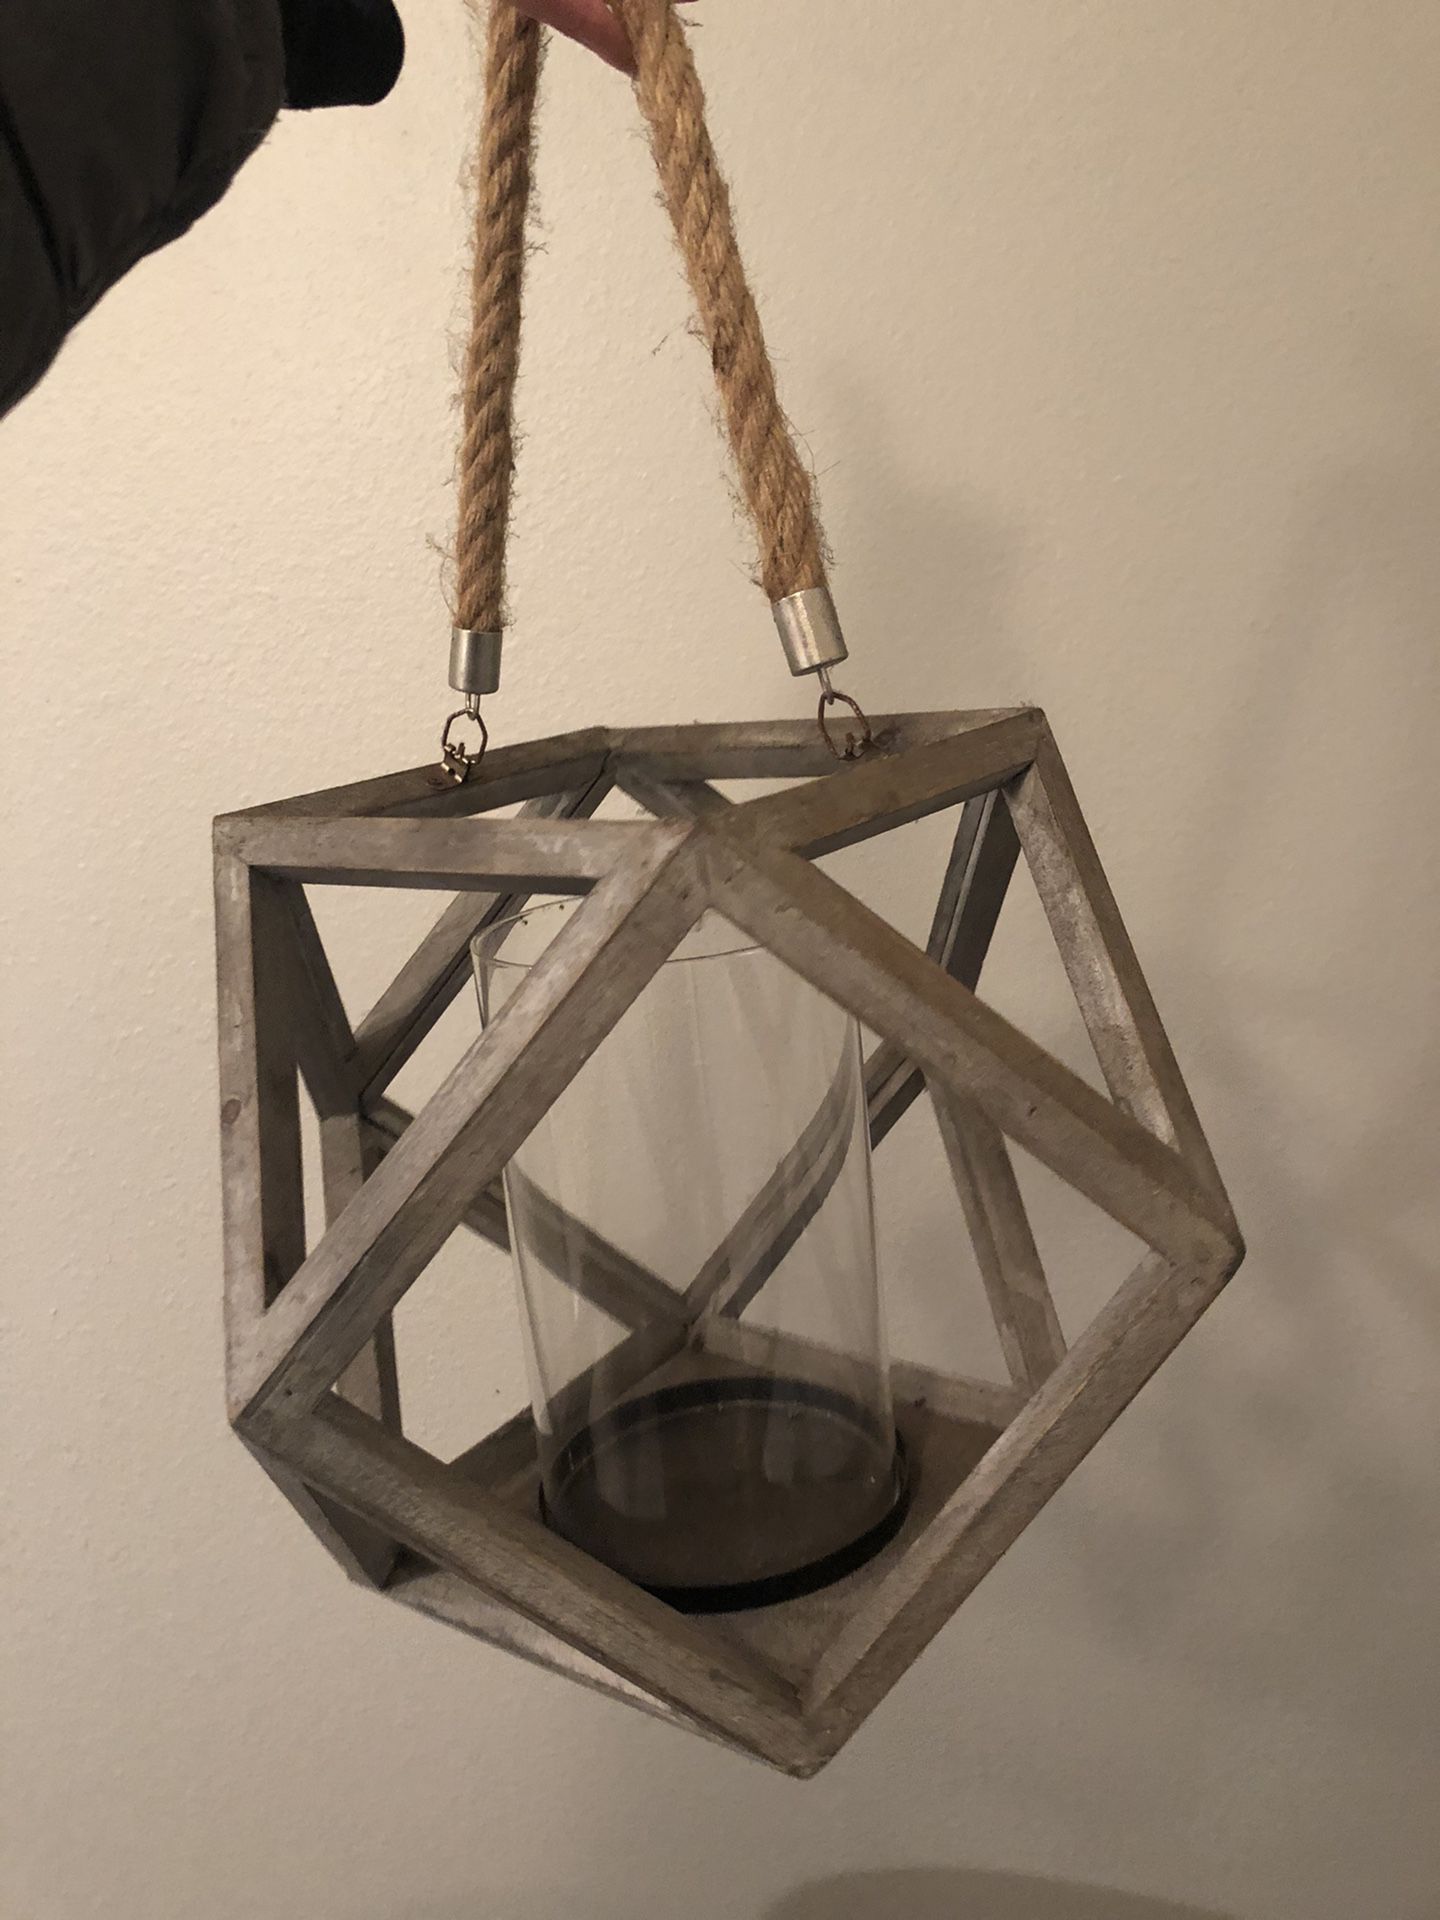 Beautiful hanging lantern or candle holder